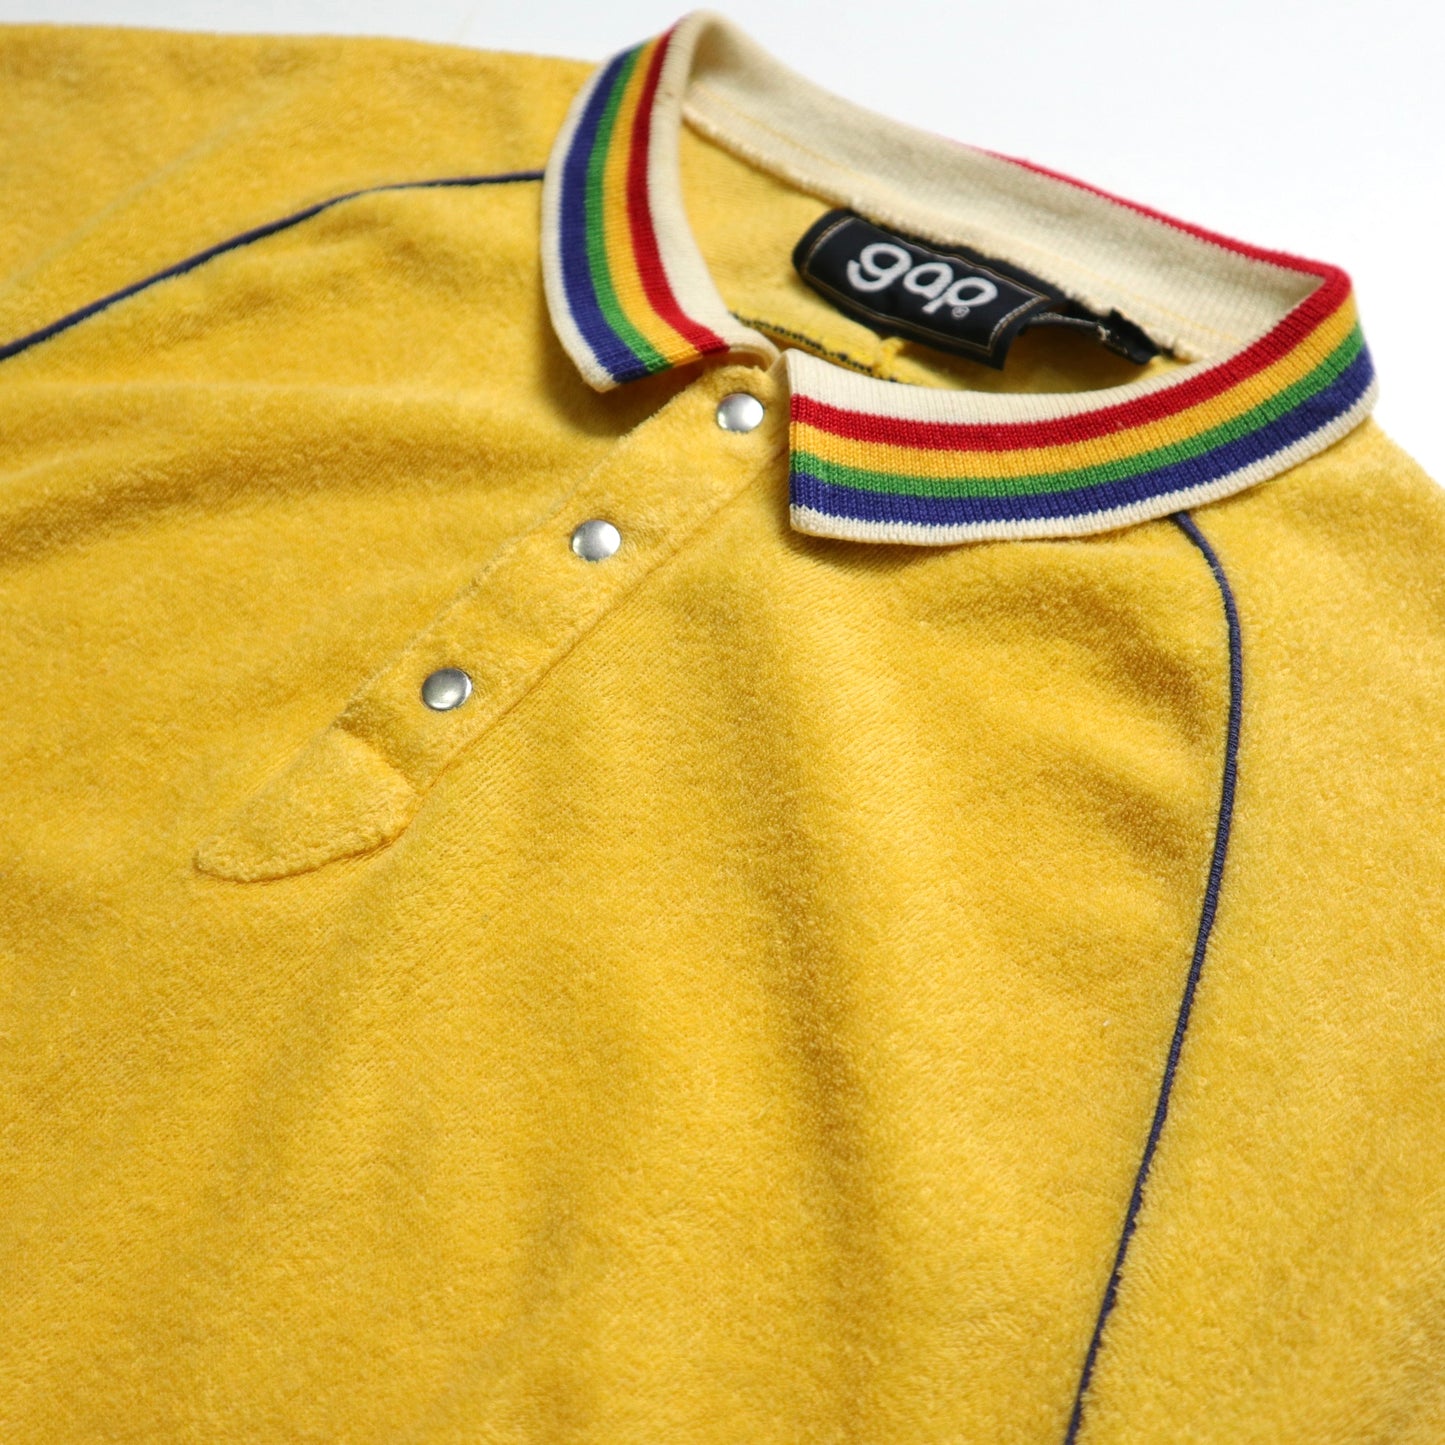 70-80s gap 黃底彩虹領毛巾布上衣 Terry cloth